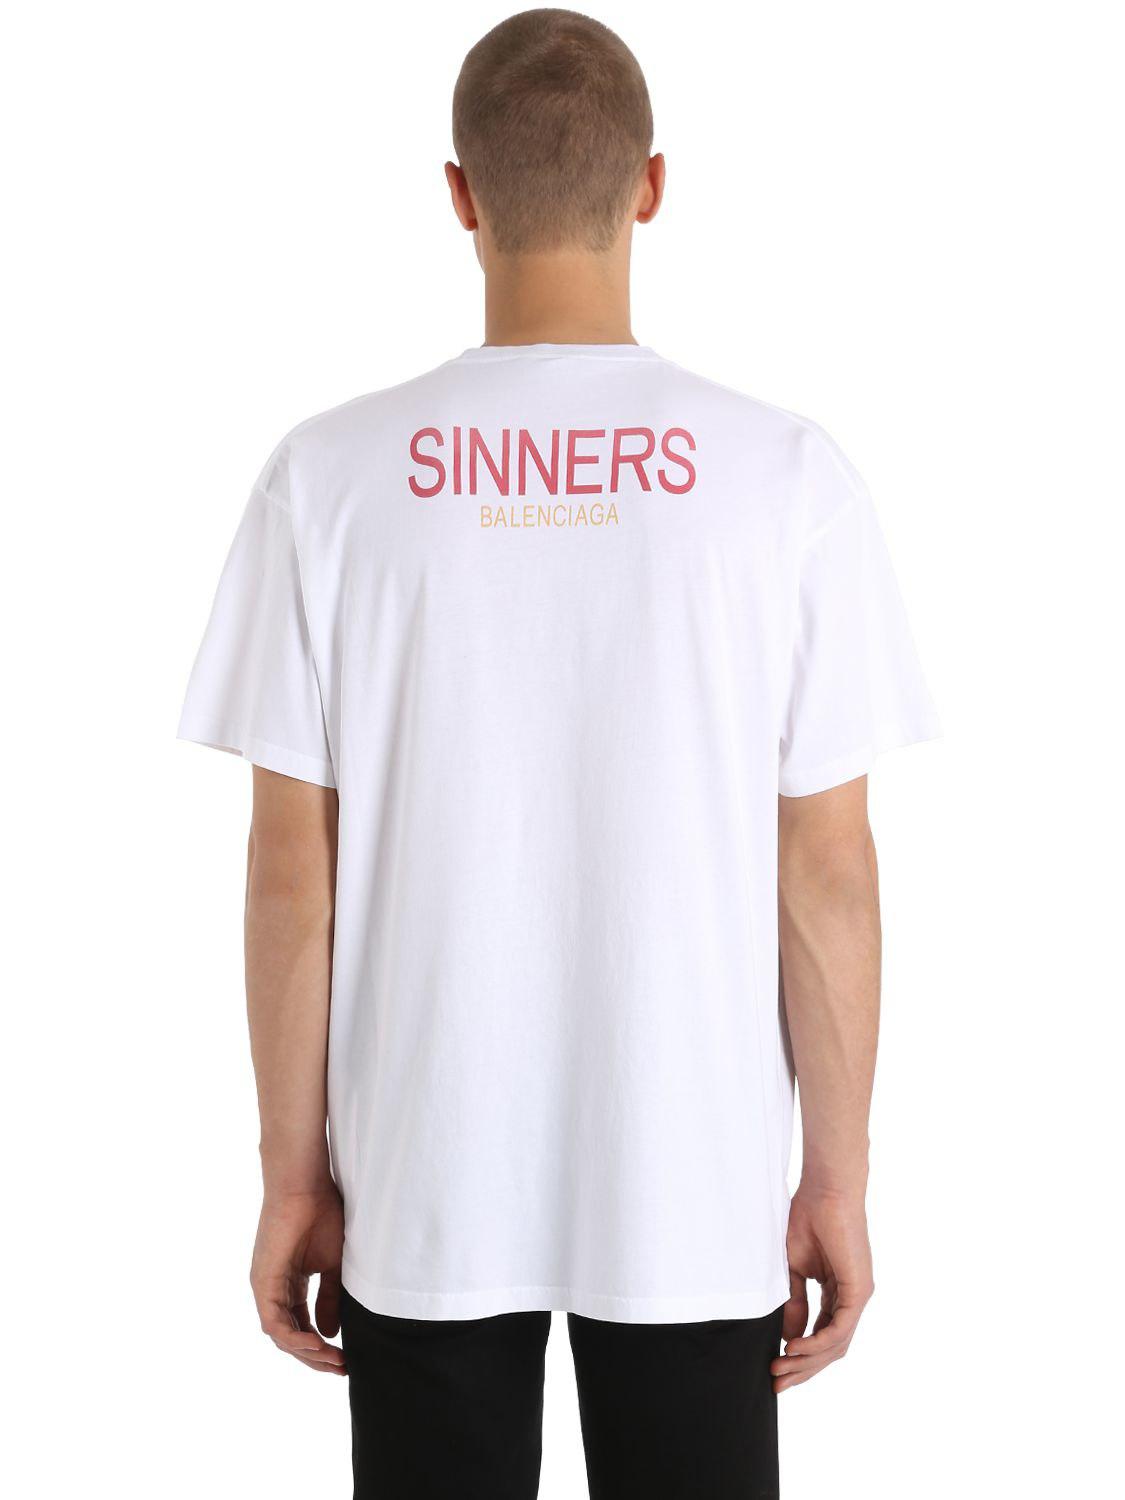 Balenciaga Sinners Printed Cotton 